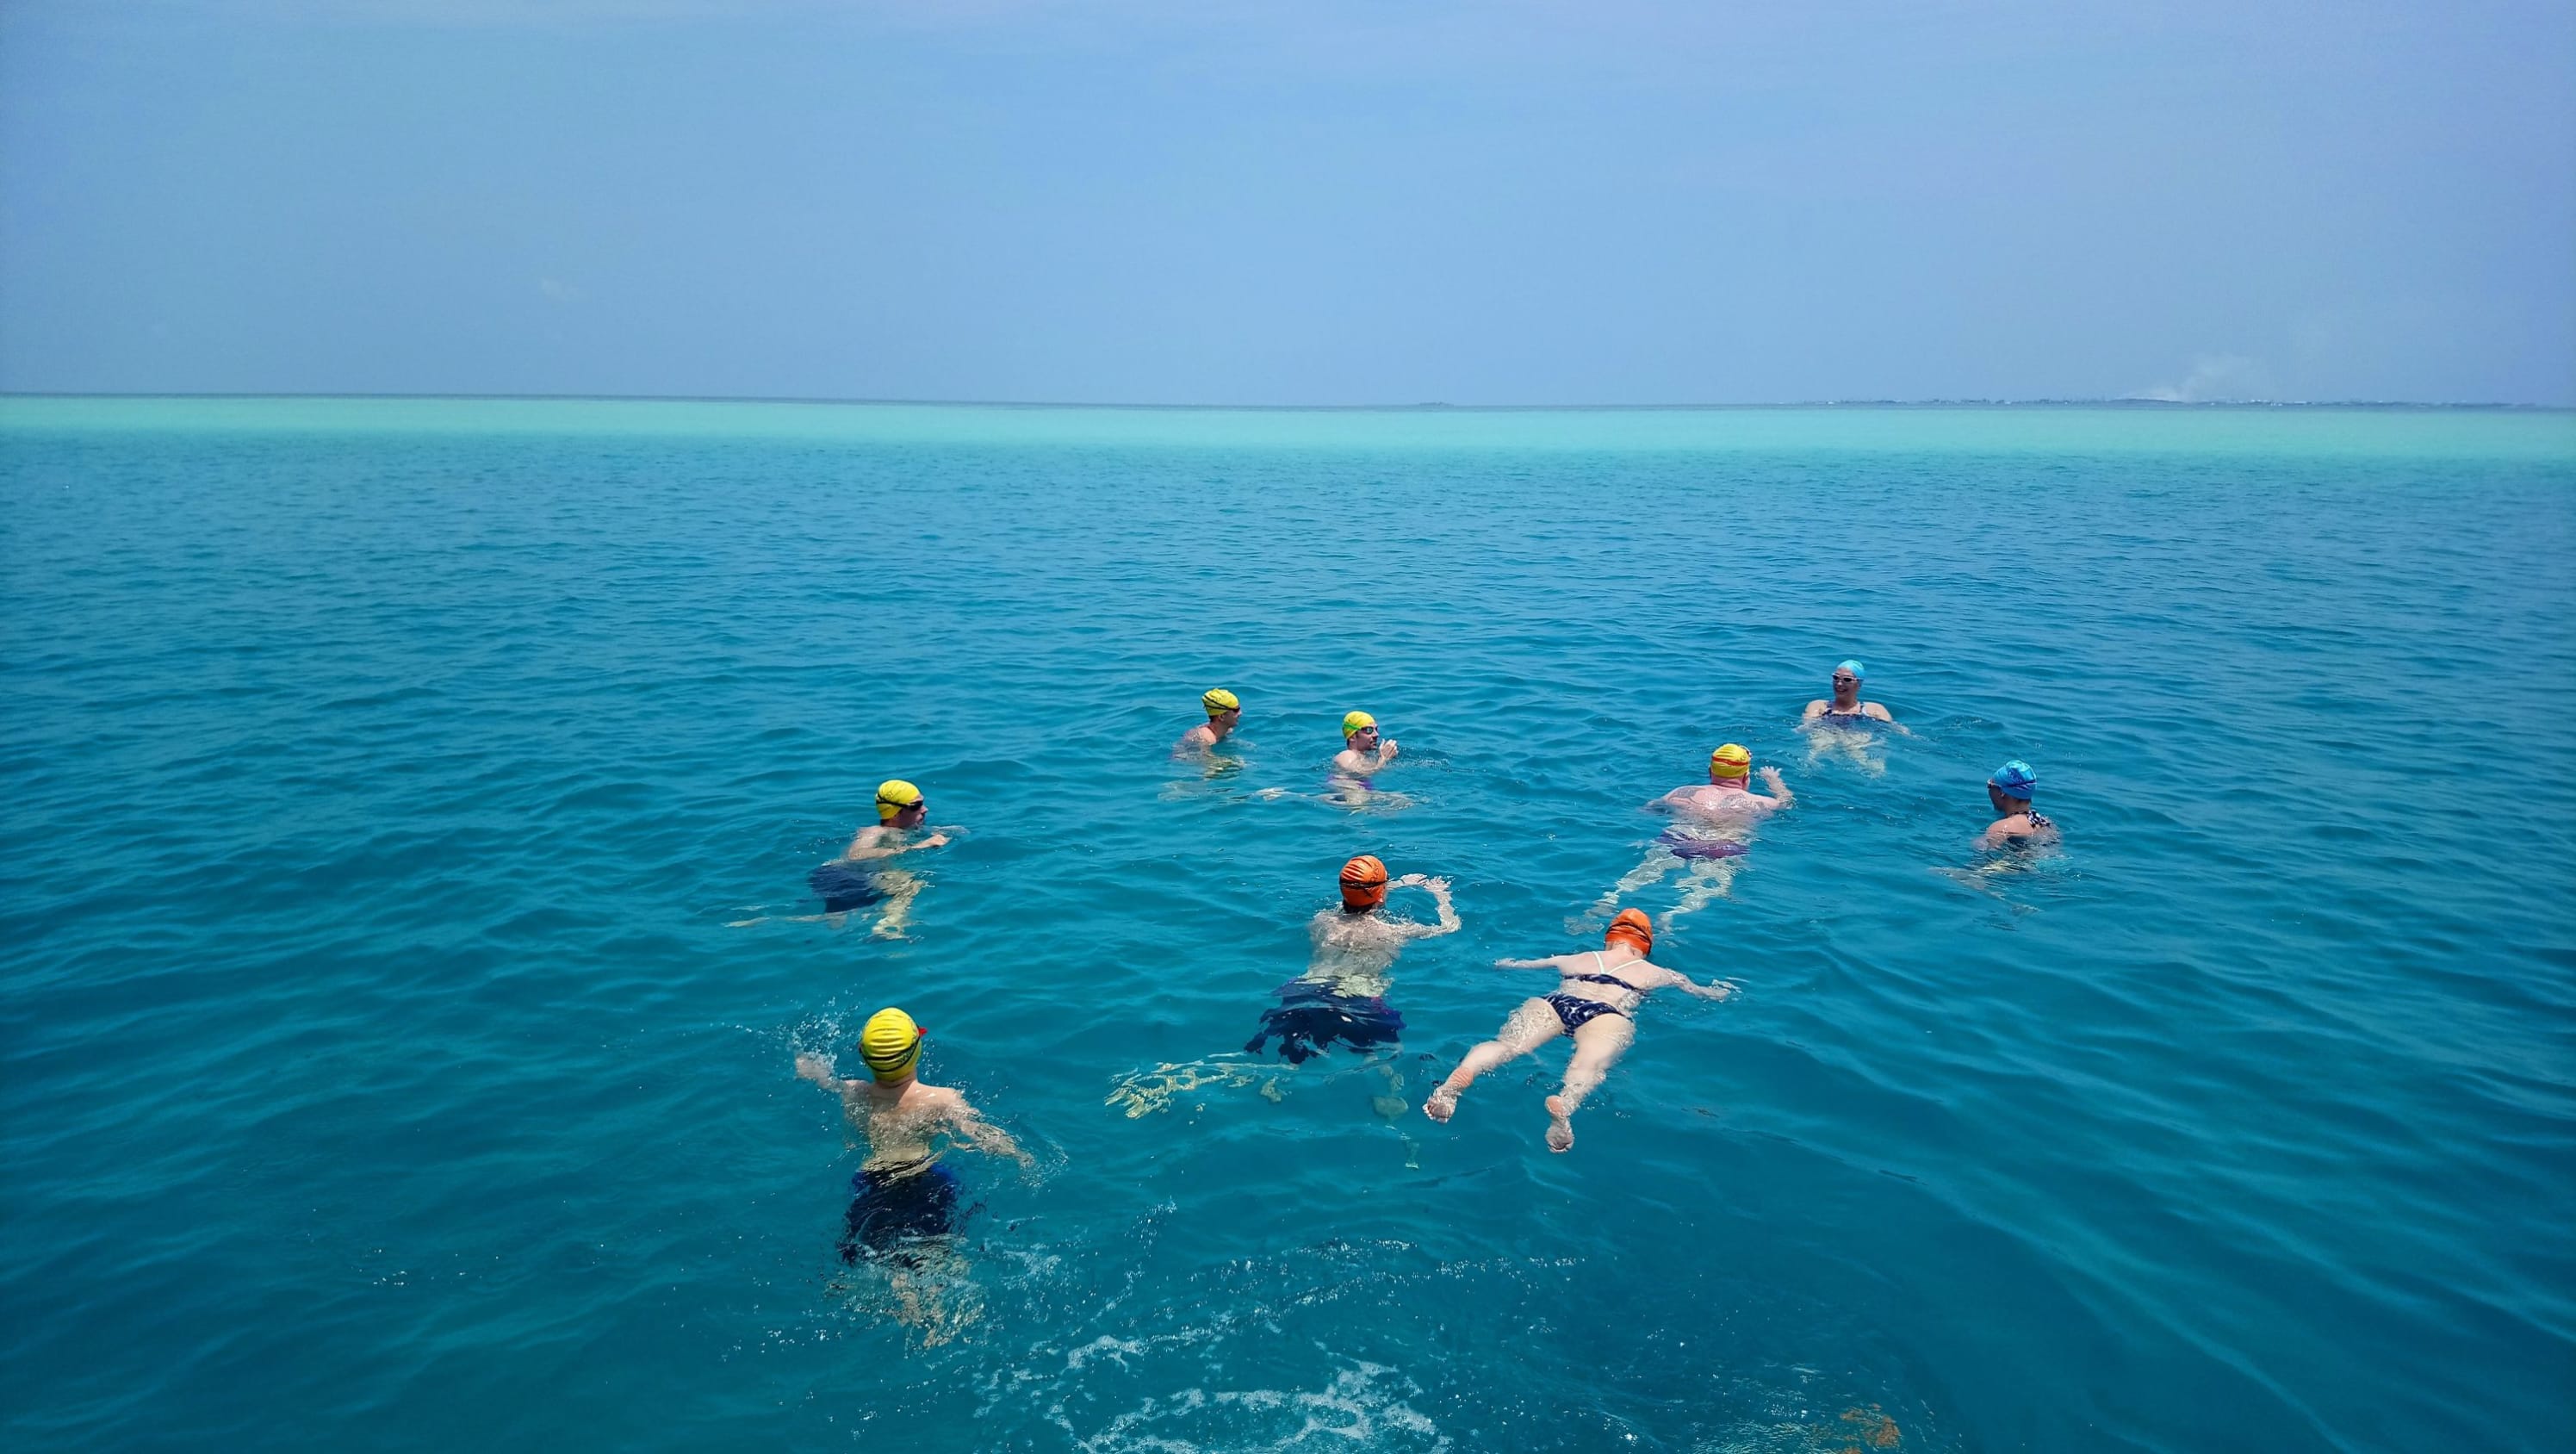 Group of swimmers in a vast ocean